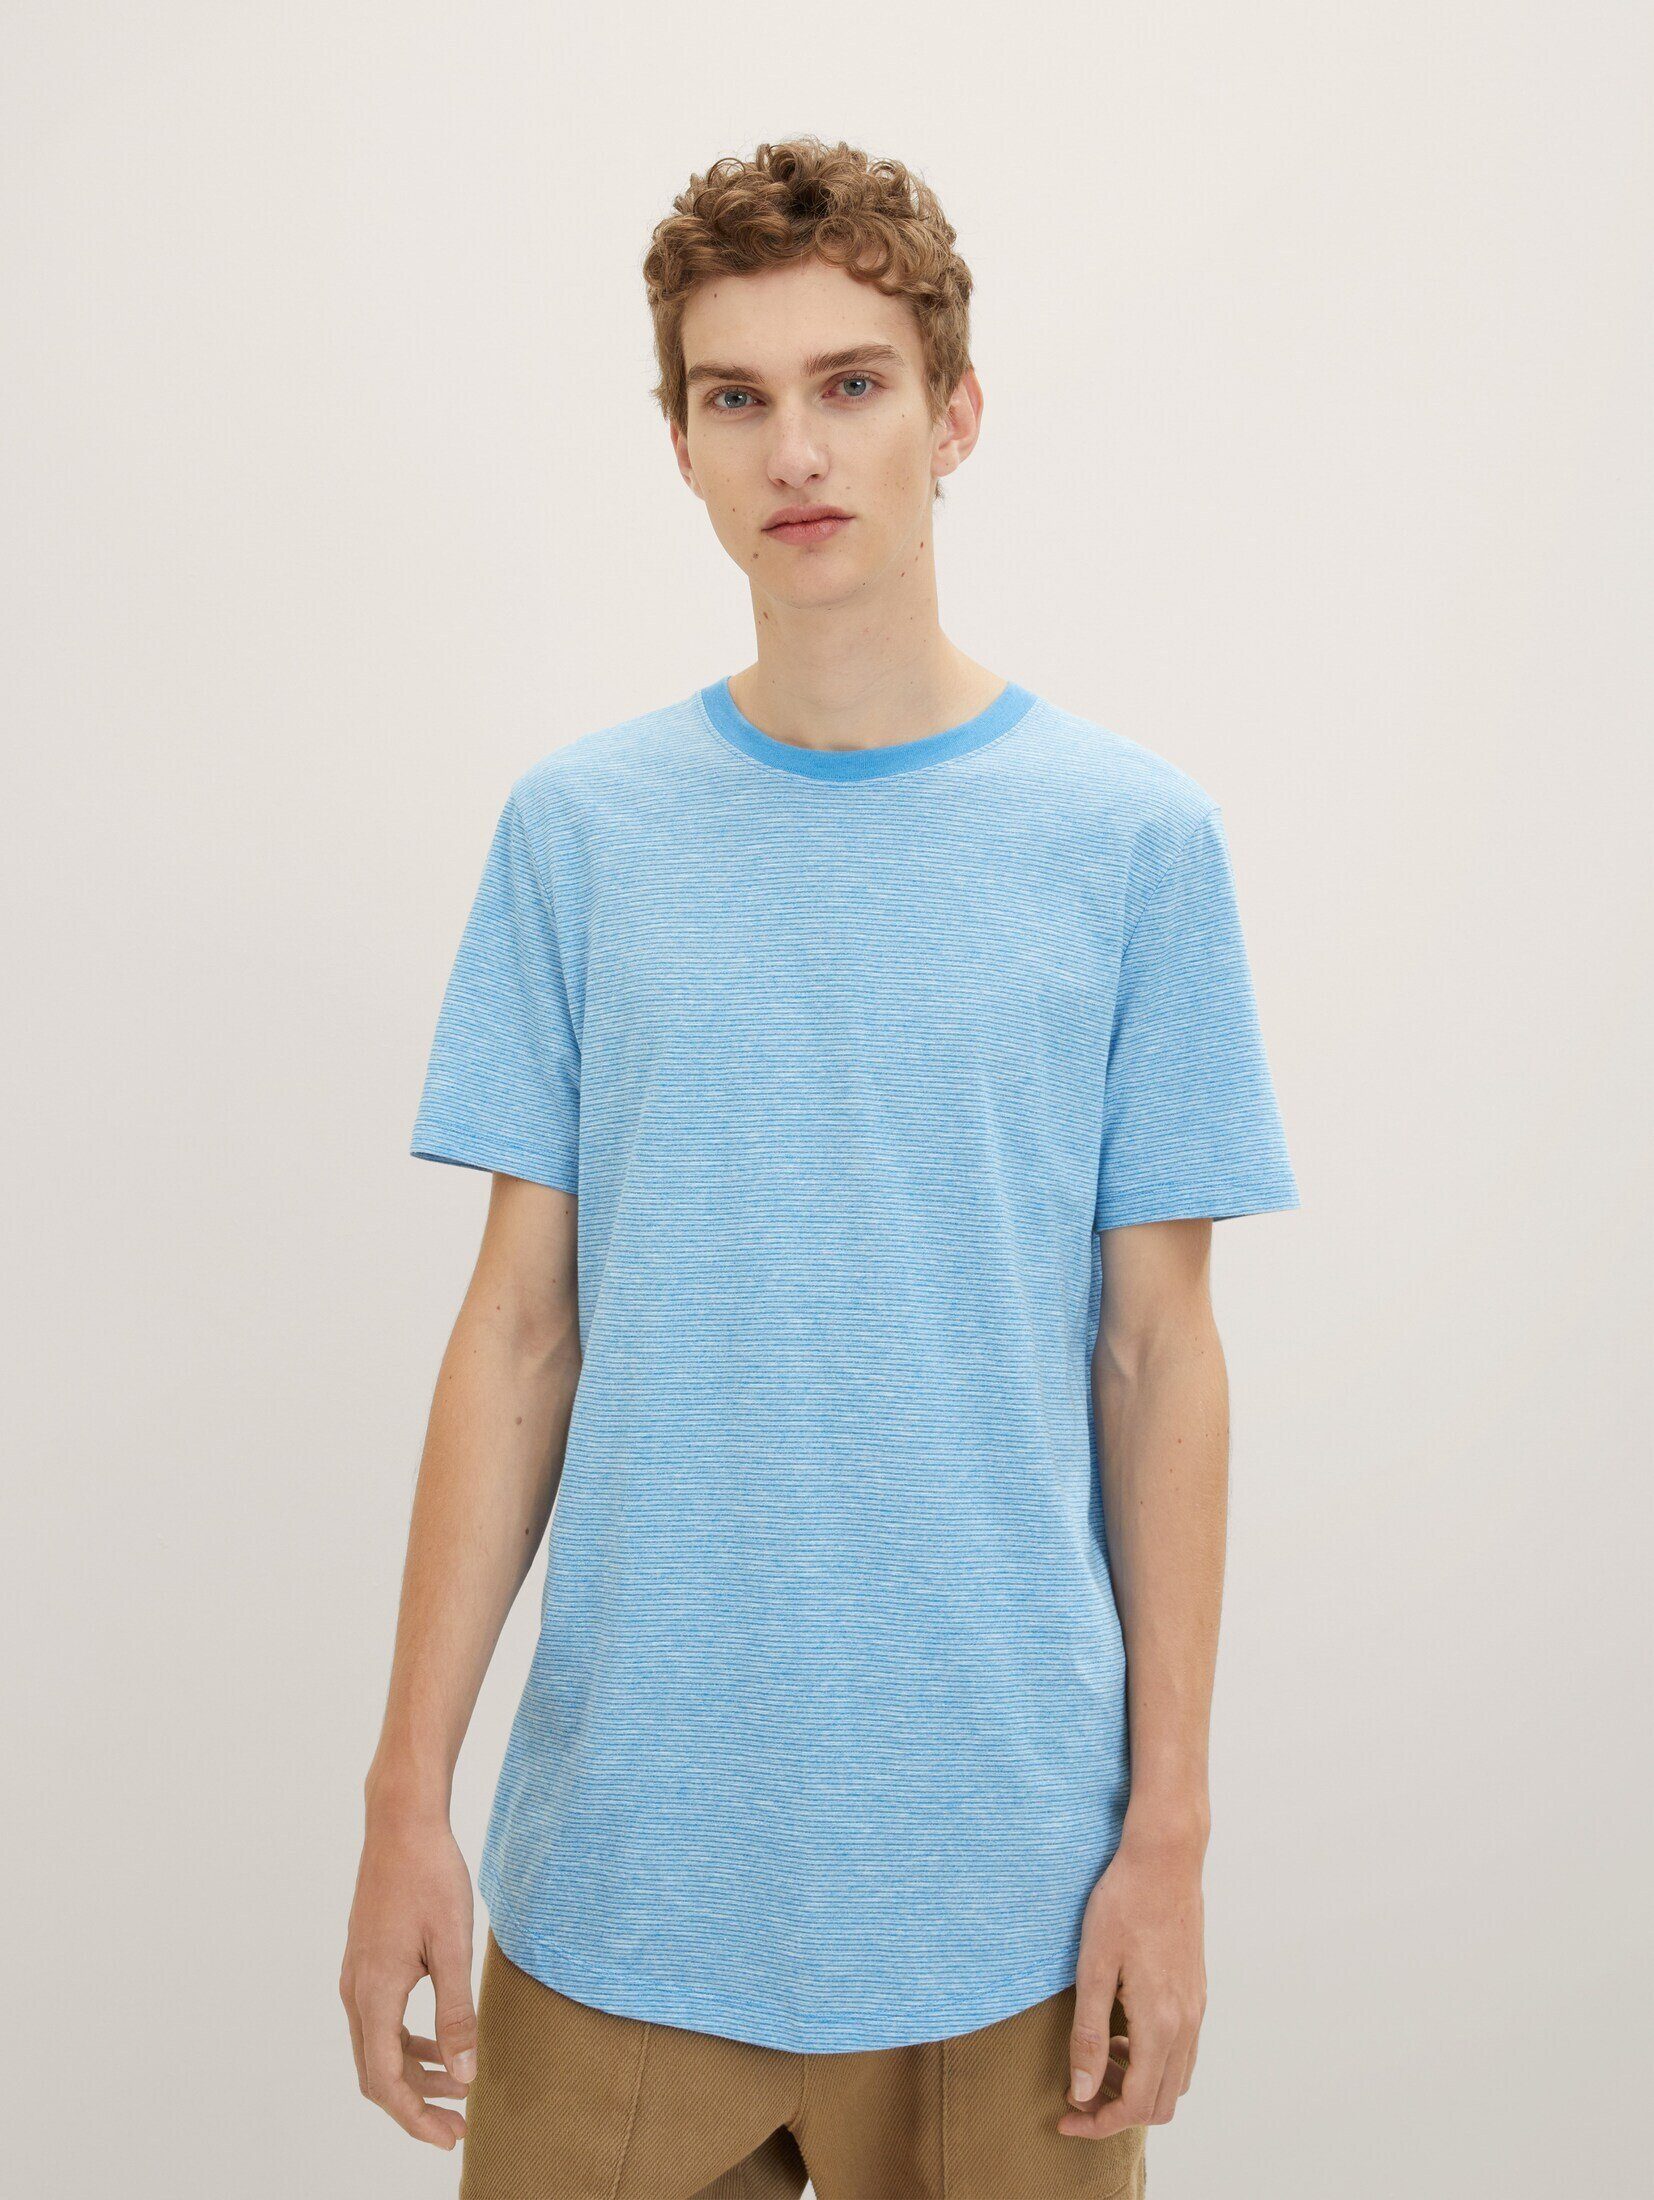 TOM TAILOR Denim T-Shirt Gestreiftes rainy T-Shirt blue sky mini Long stripe